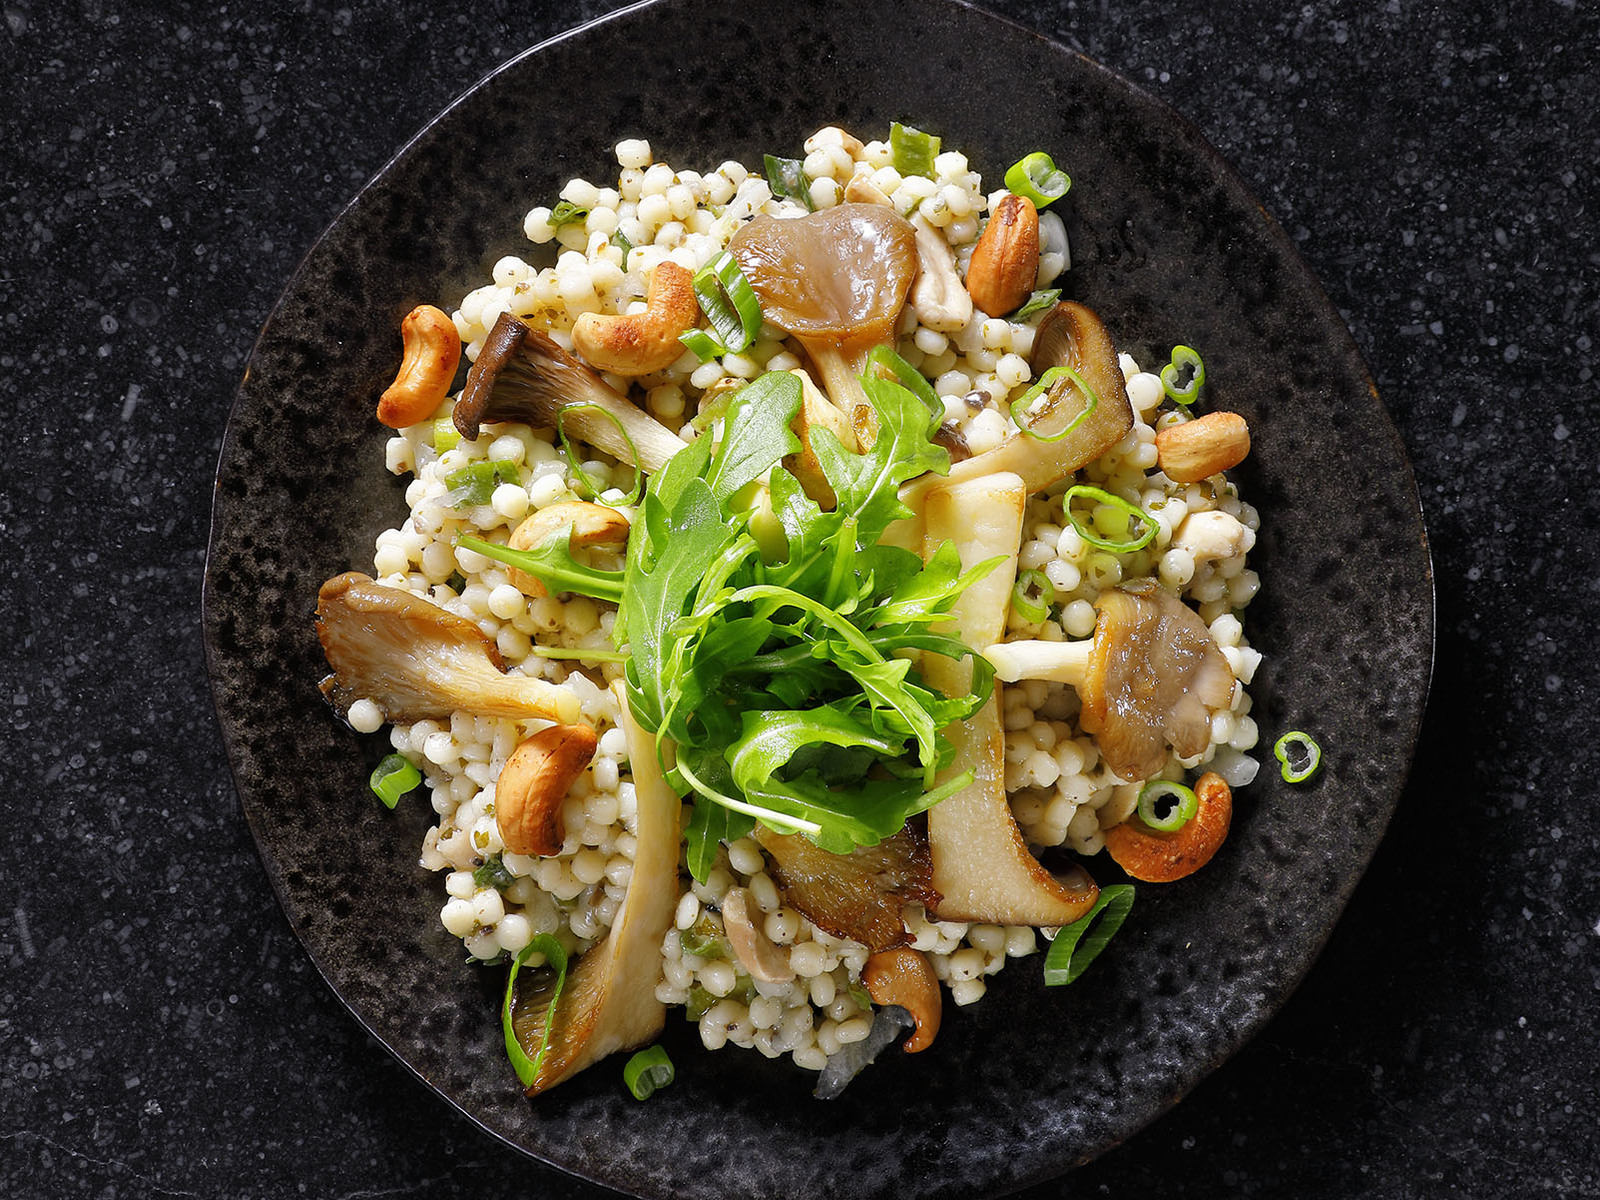 Couscous Productief klein Website Gourmet Salades geheel vernieuwd • News - SlagersVak